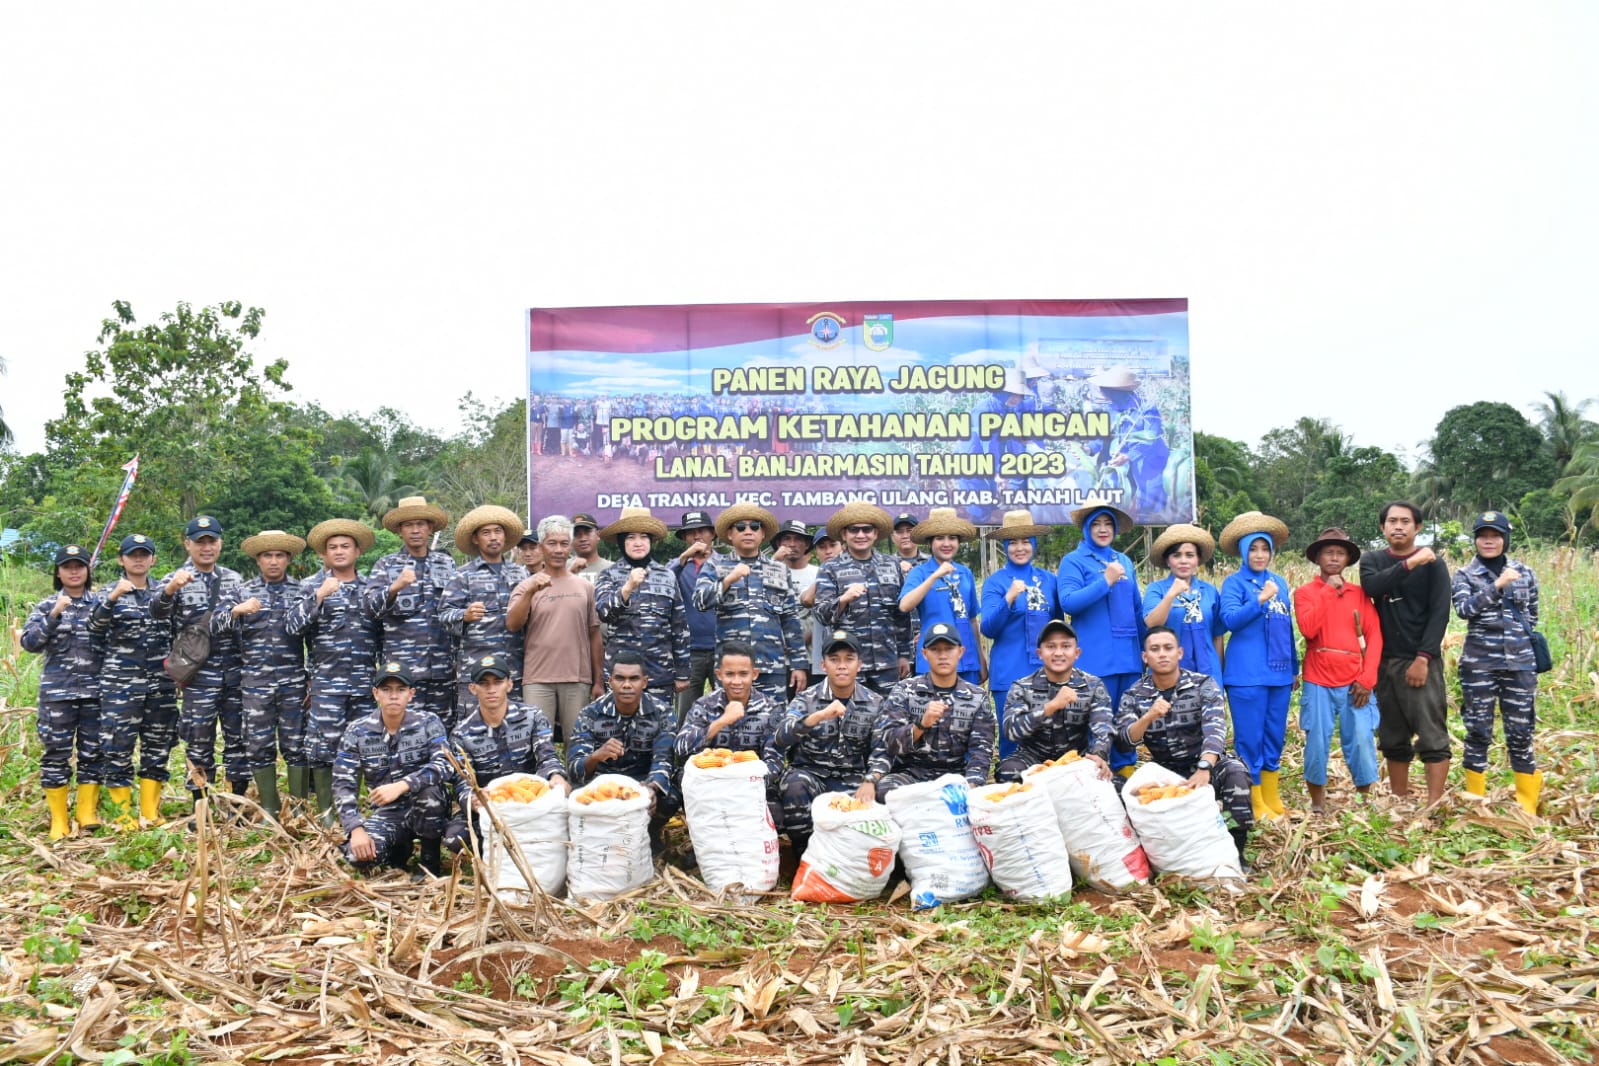 Dukung Program Ketahanan Pangan, TNI AL Banjarmasin Laksanakan Panen Raya Jagung